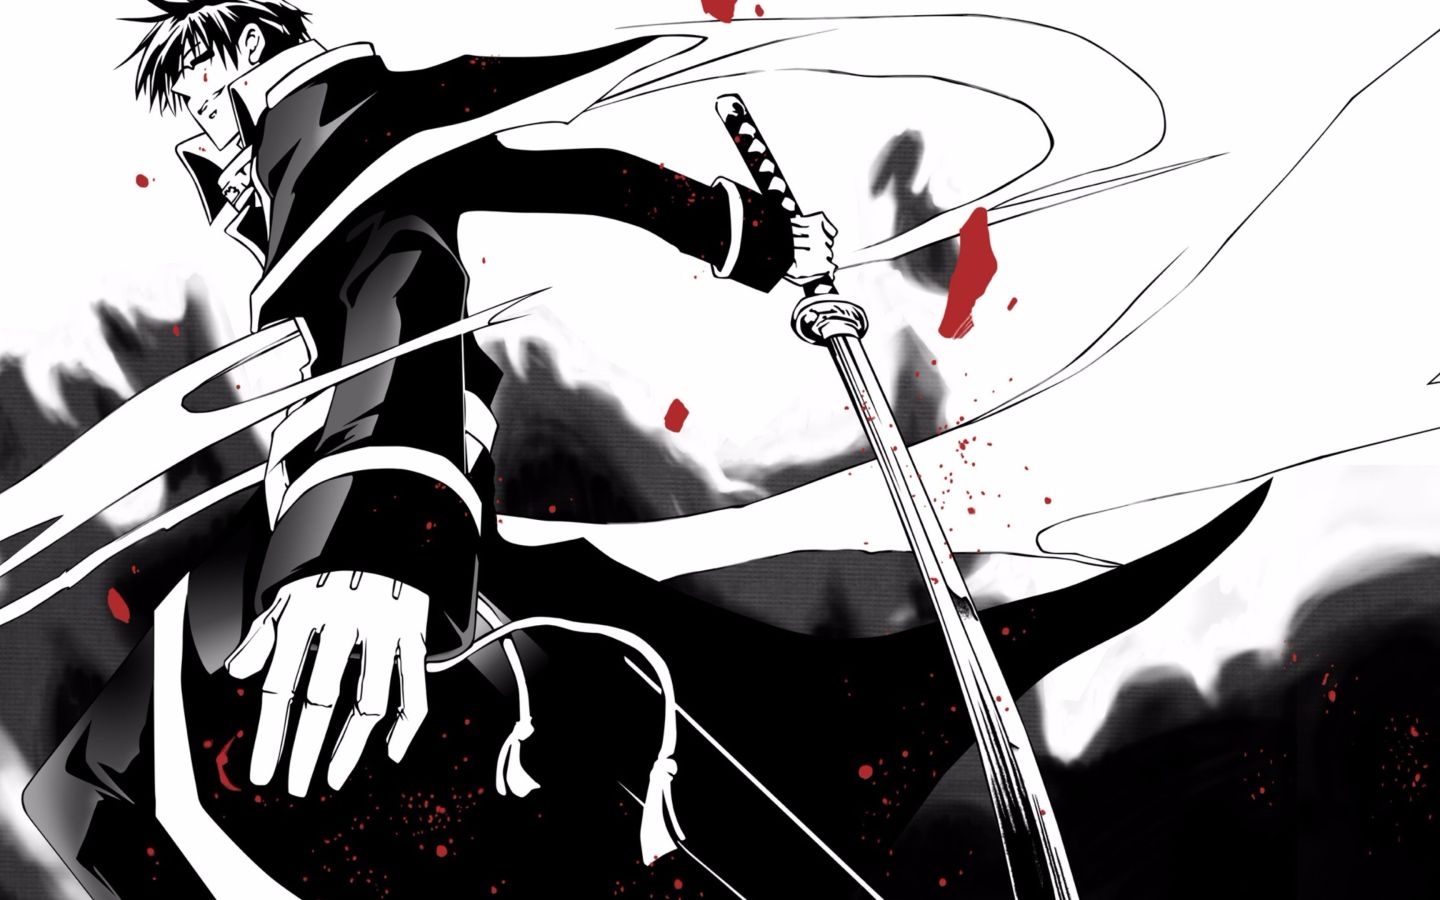 Swordsman Anime wallpaper in 1440x900 resolution